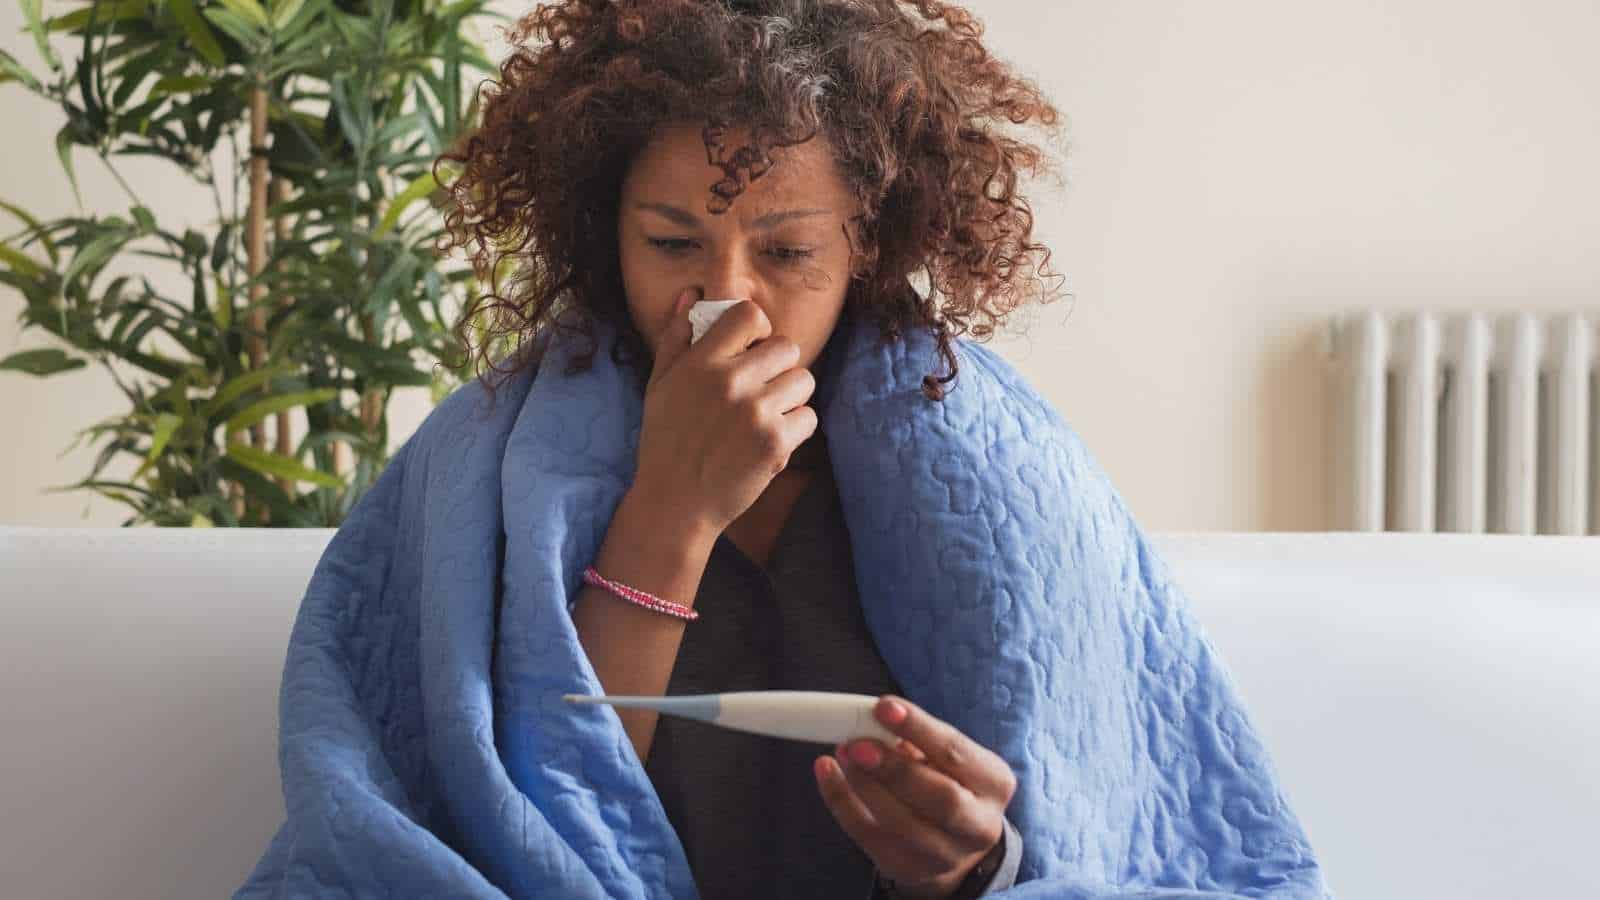 10 Flu Season Survival Tips Never to Overlook